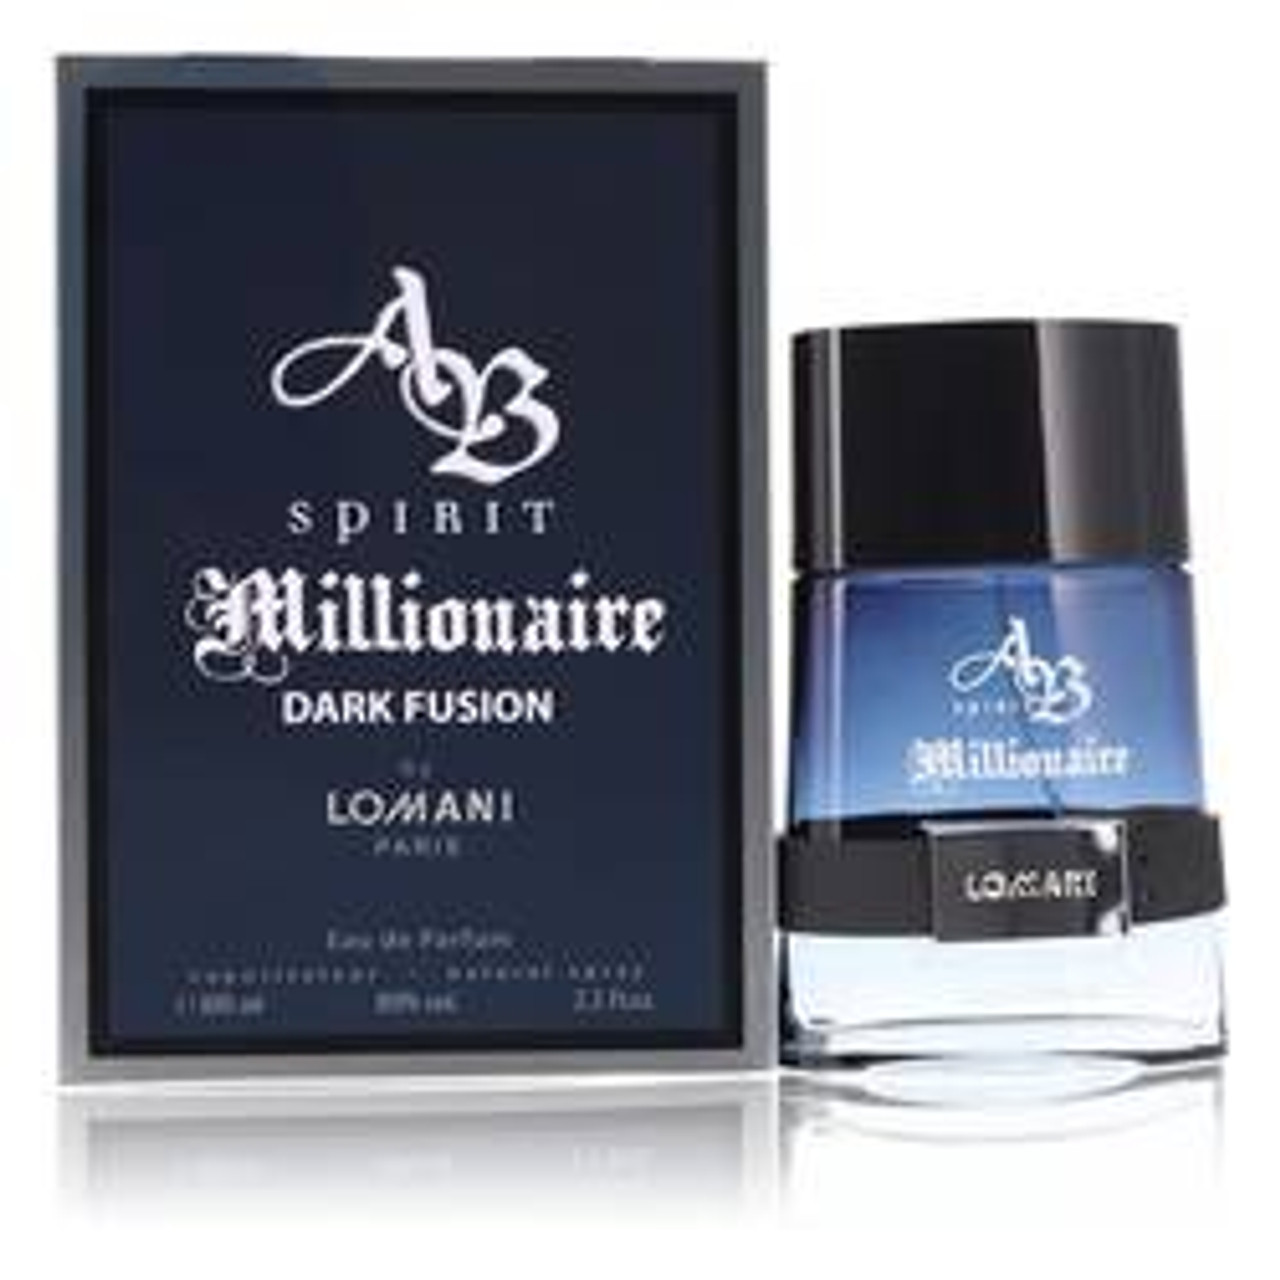 Spirit Millionaire Dark Fusion Cologne By Lomani Eau De Parfum Spray 3.3 oz for Men - [From 55.00 - Choose pk Qty ] - *Ships from Miami